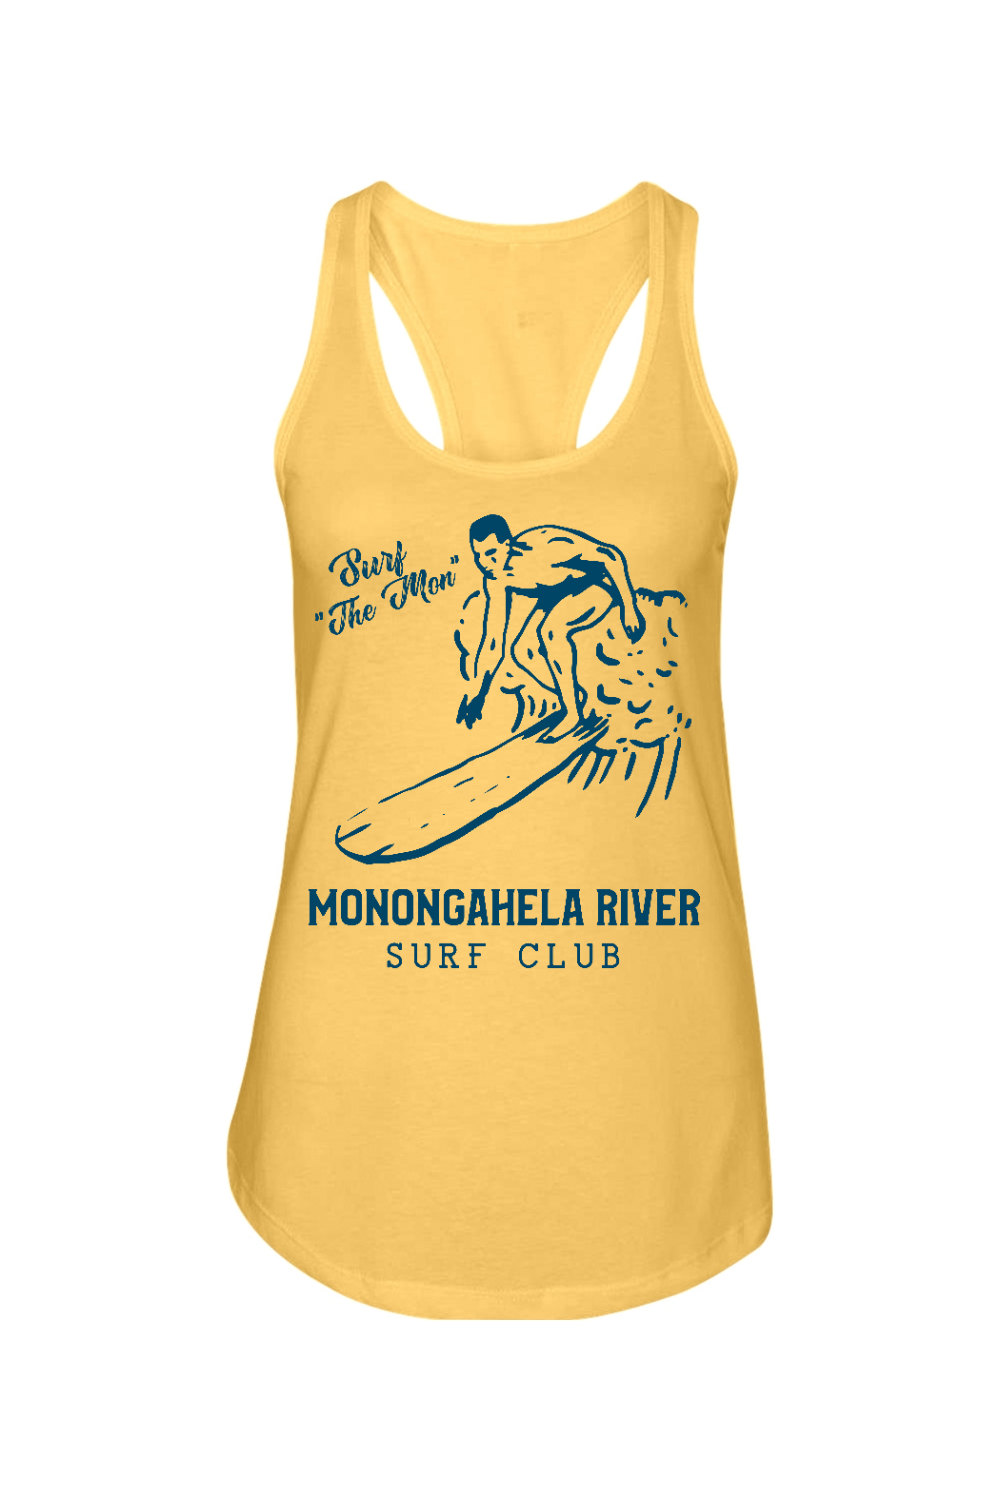 Monongahela River Surf Club - Ladies Racerback Tank - Yinzylvania